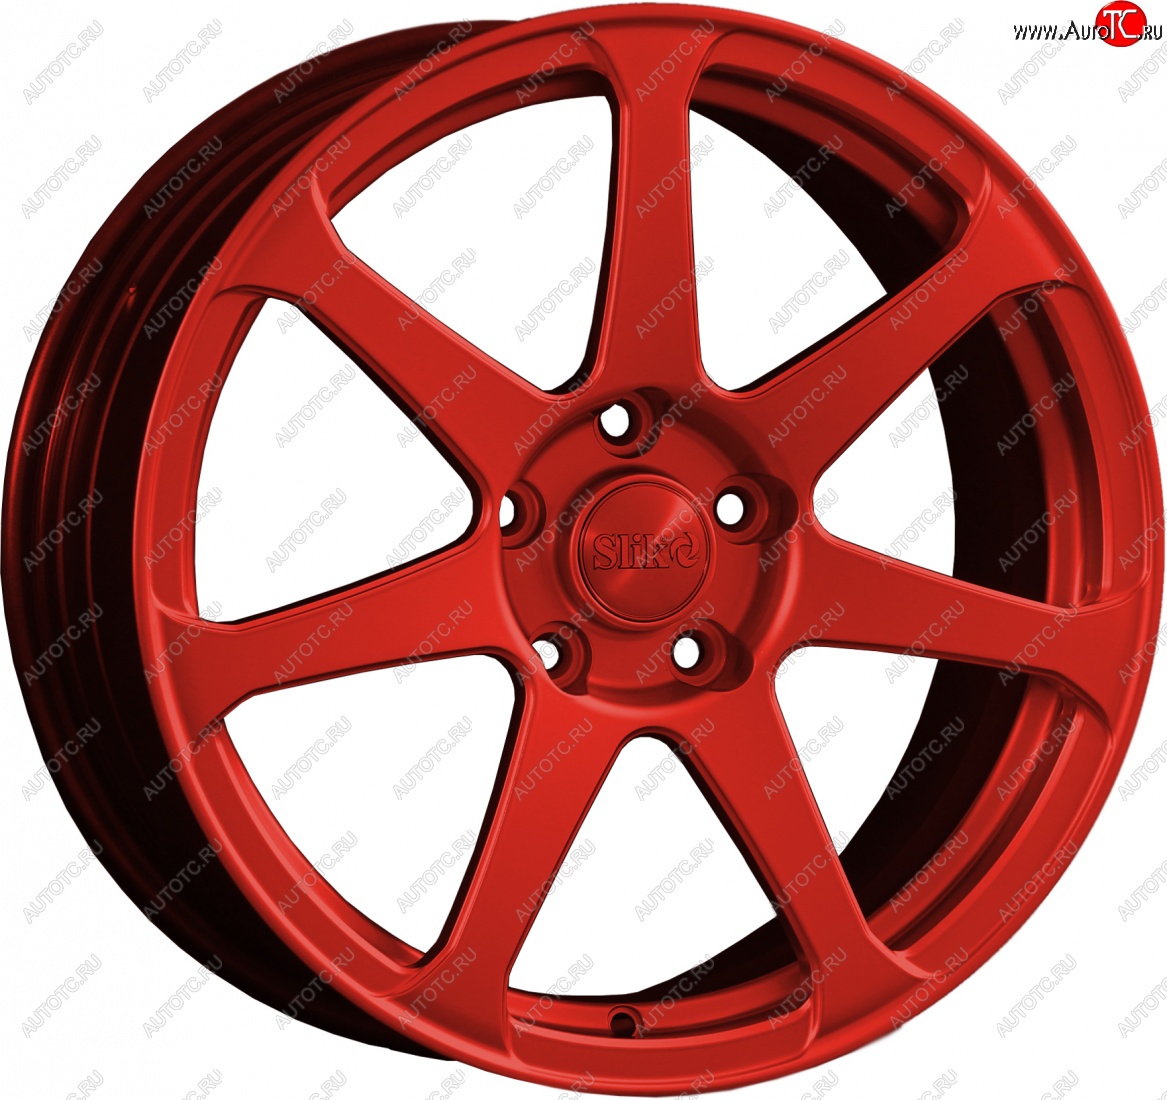 14 599 р. Кованый диск Slik classik R17x7.5 Красный (RED) 7.5x17 Toyota Allion T240 седан дорестайлинг (2001-2004) 5x100.0xDIA54.1xET45.0 (Цвет: RED)